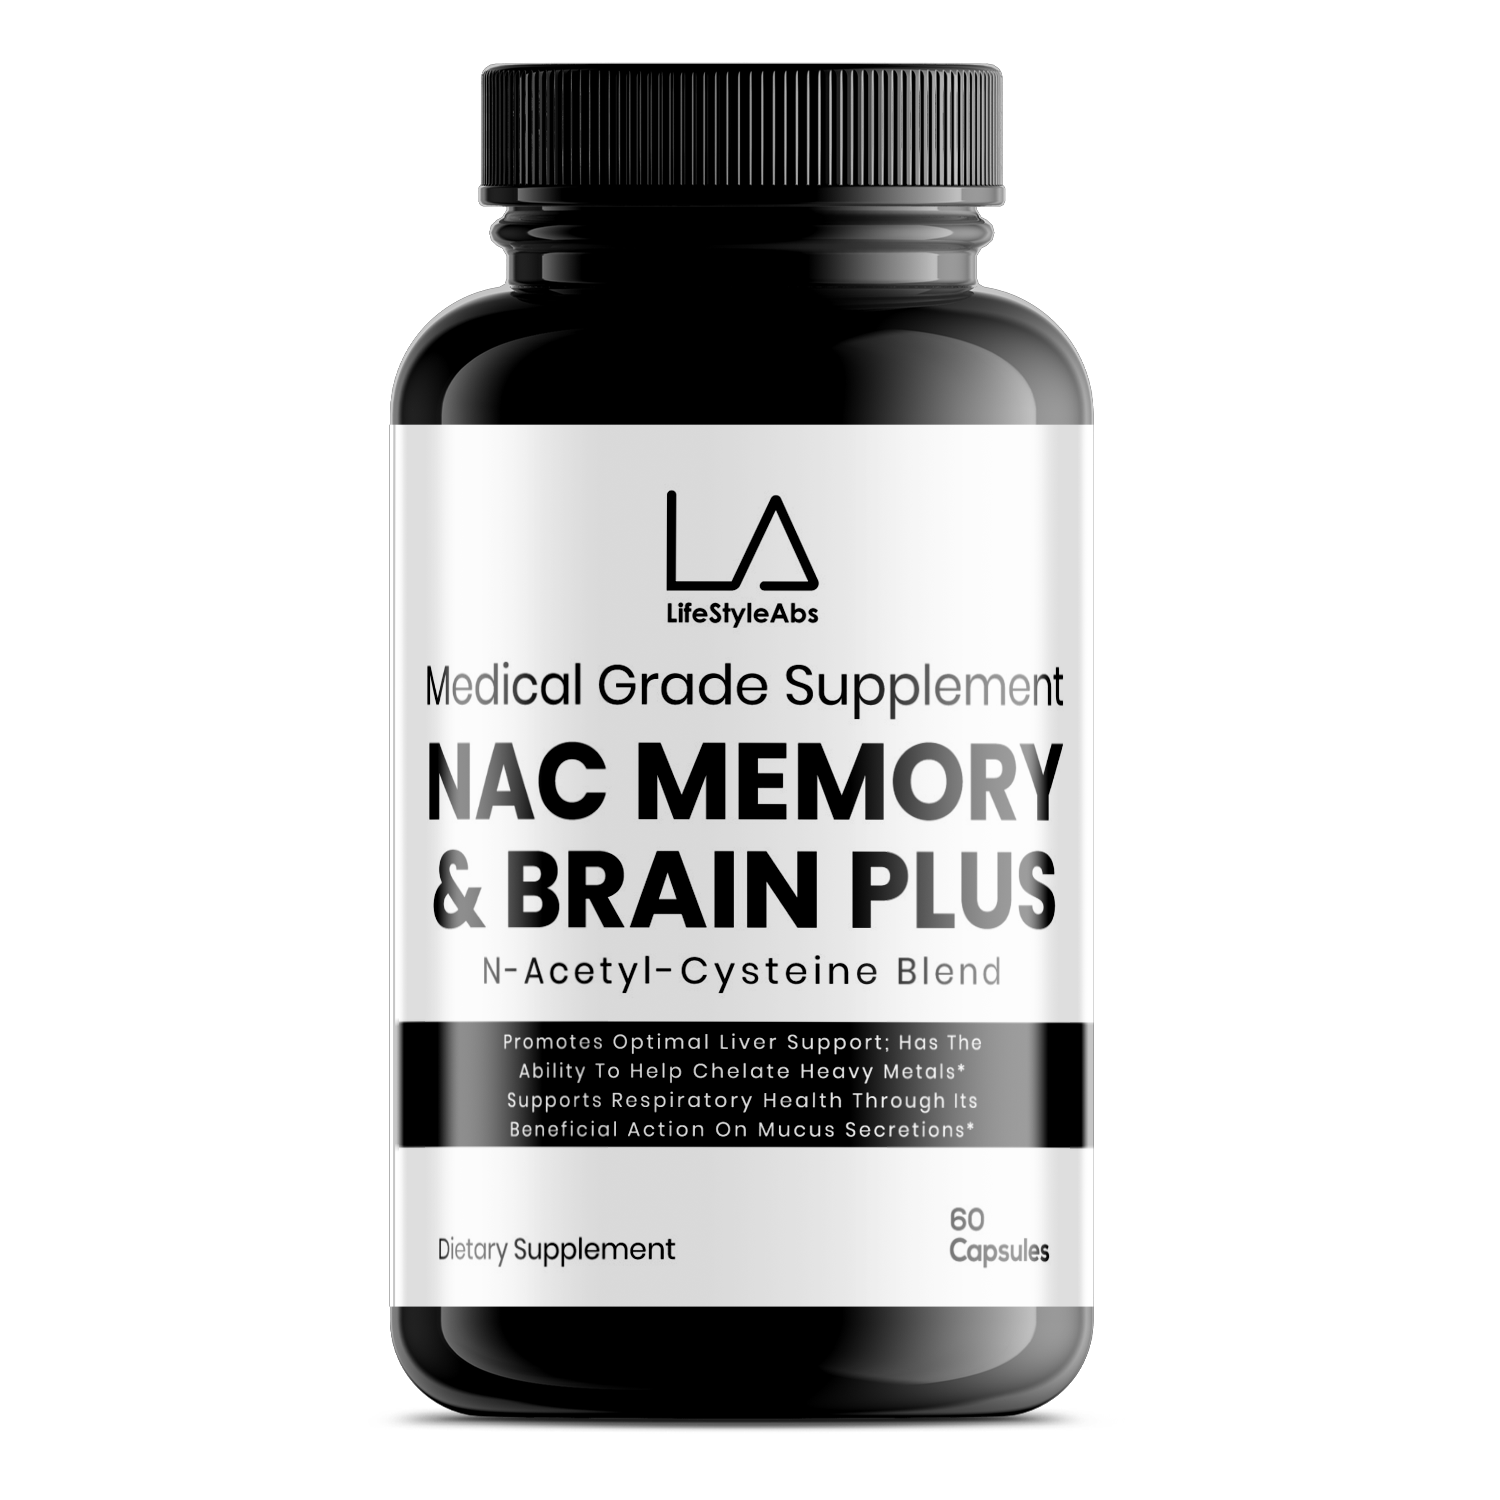 NAC Memory & Brain Plus